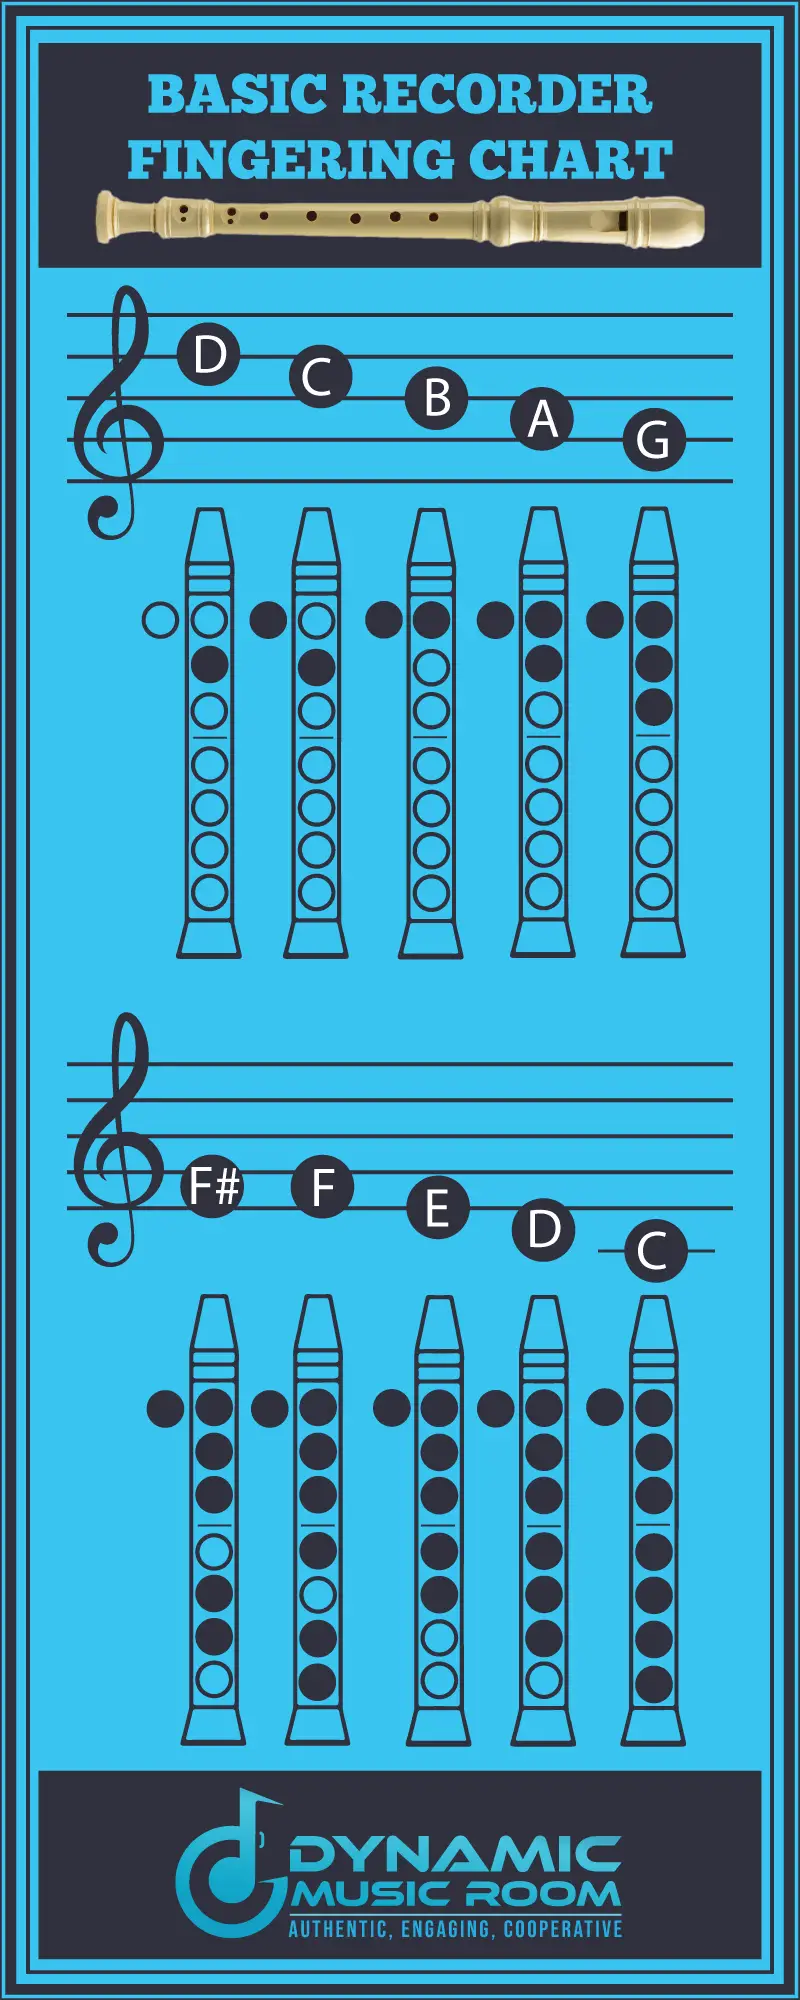 image basic recorder fingering chart